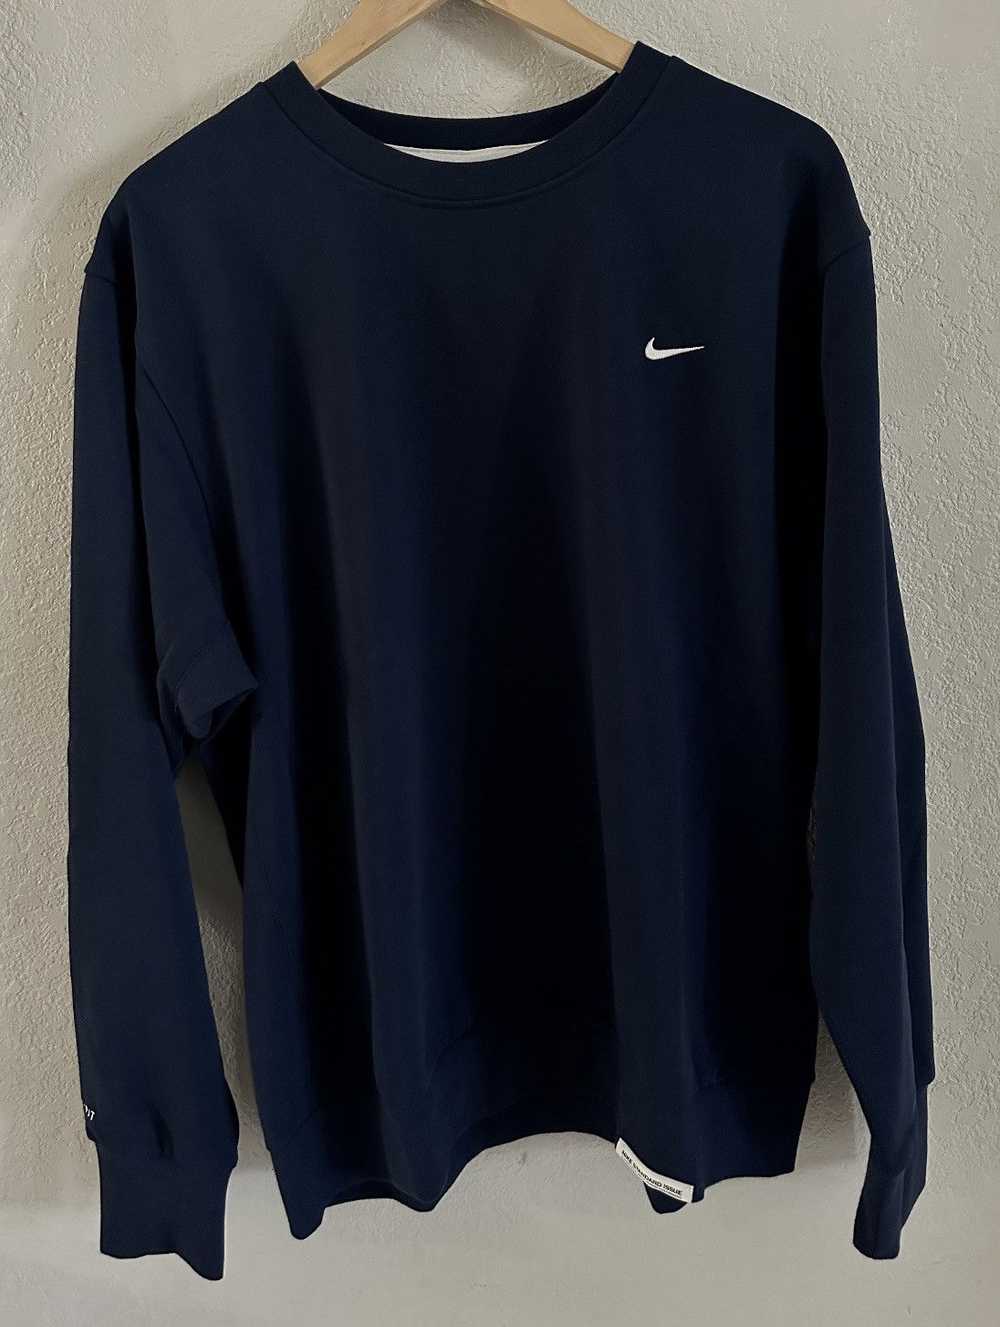 Nike Nike sweatshirt men’s size Large - image 1